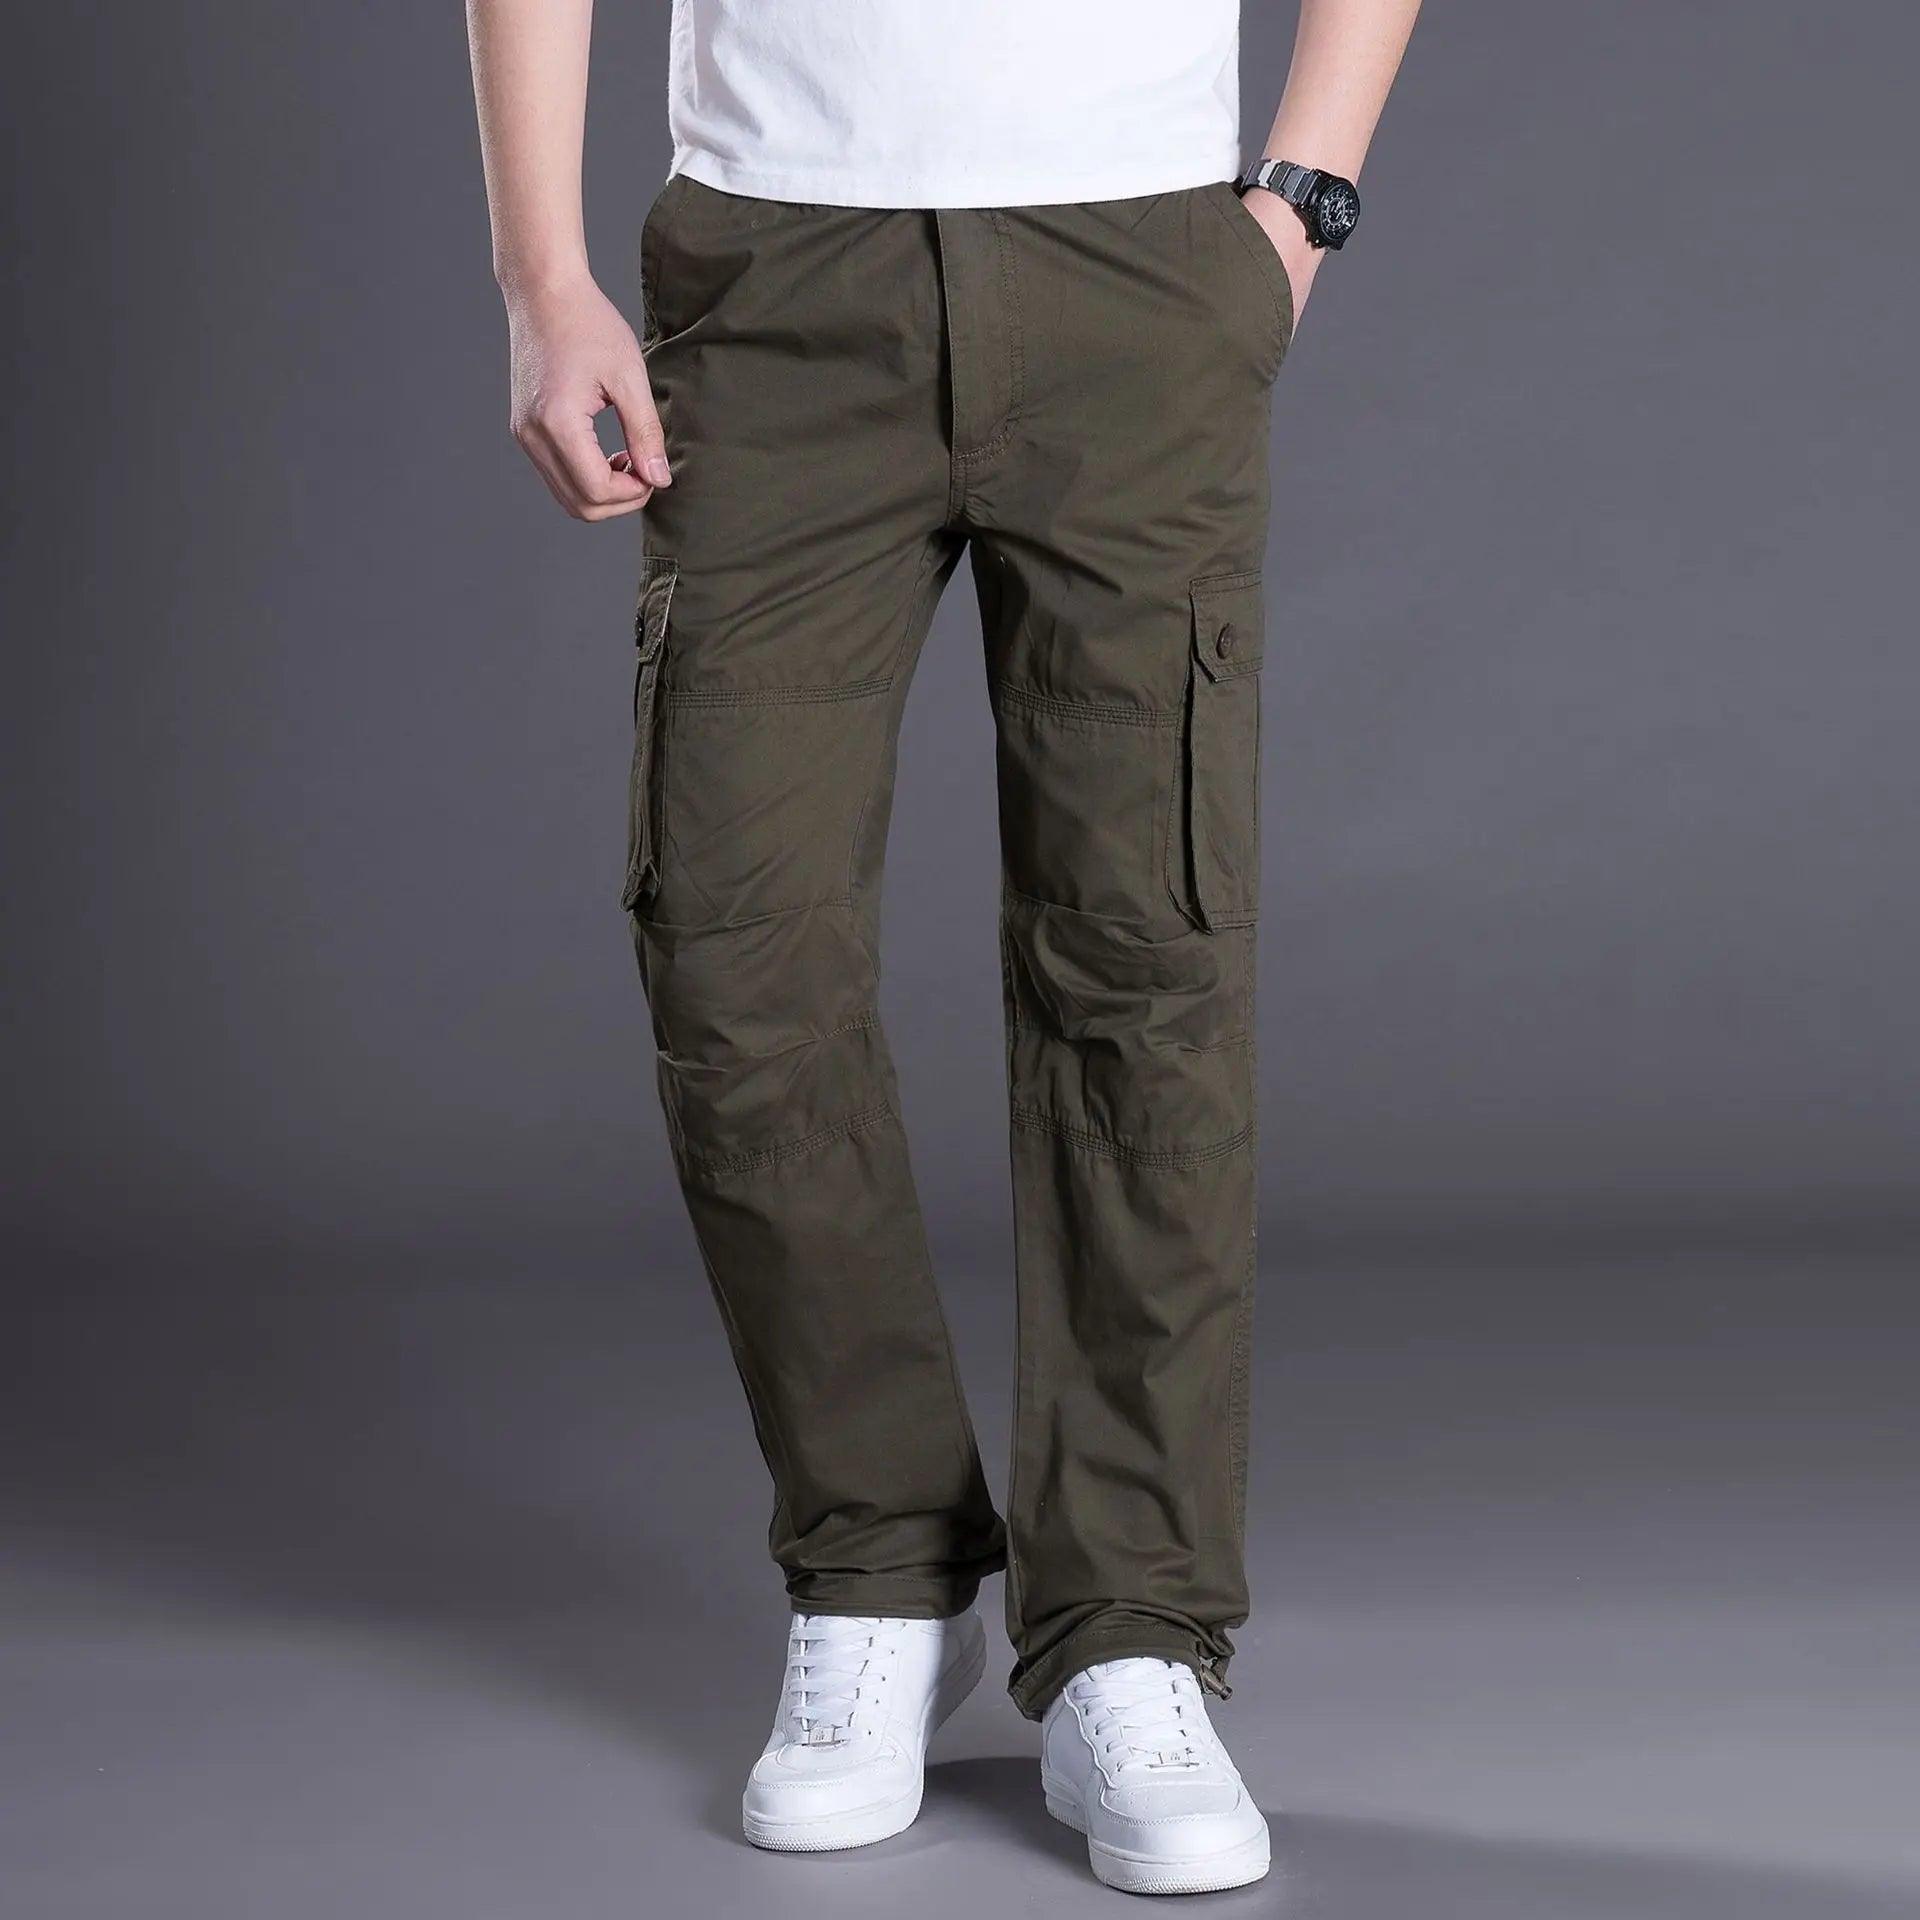 Cargo Pants for Men - Multipockets - Cargo Pants - LeStyleParfait